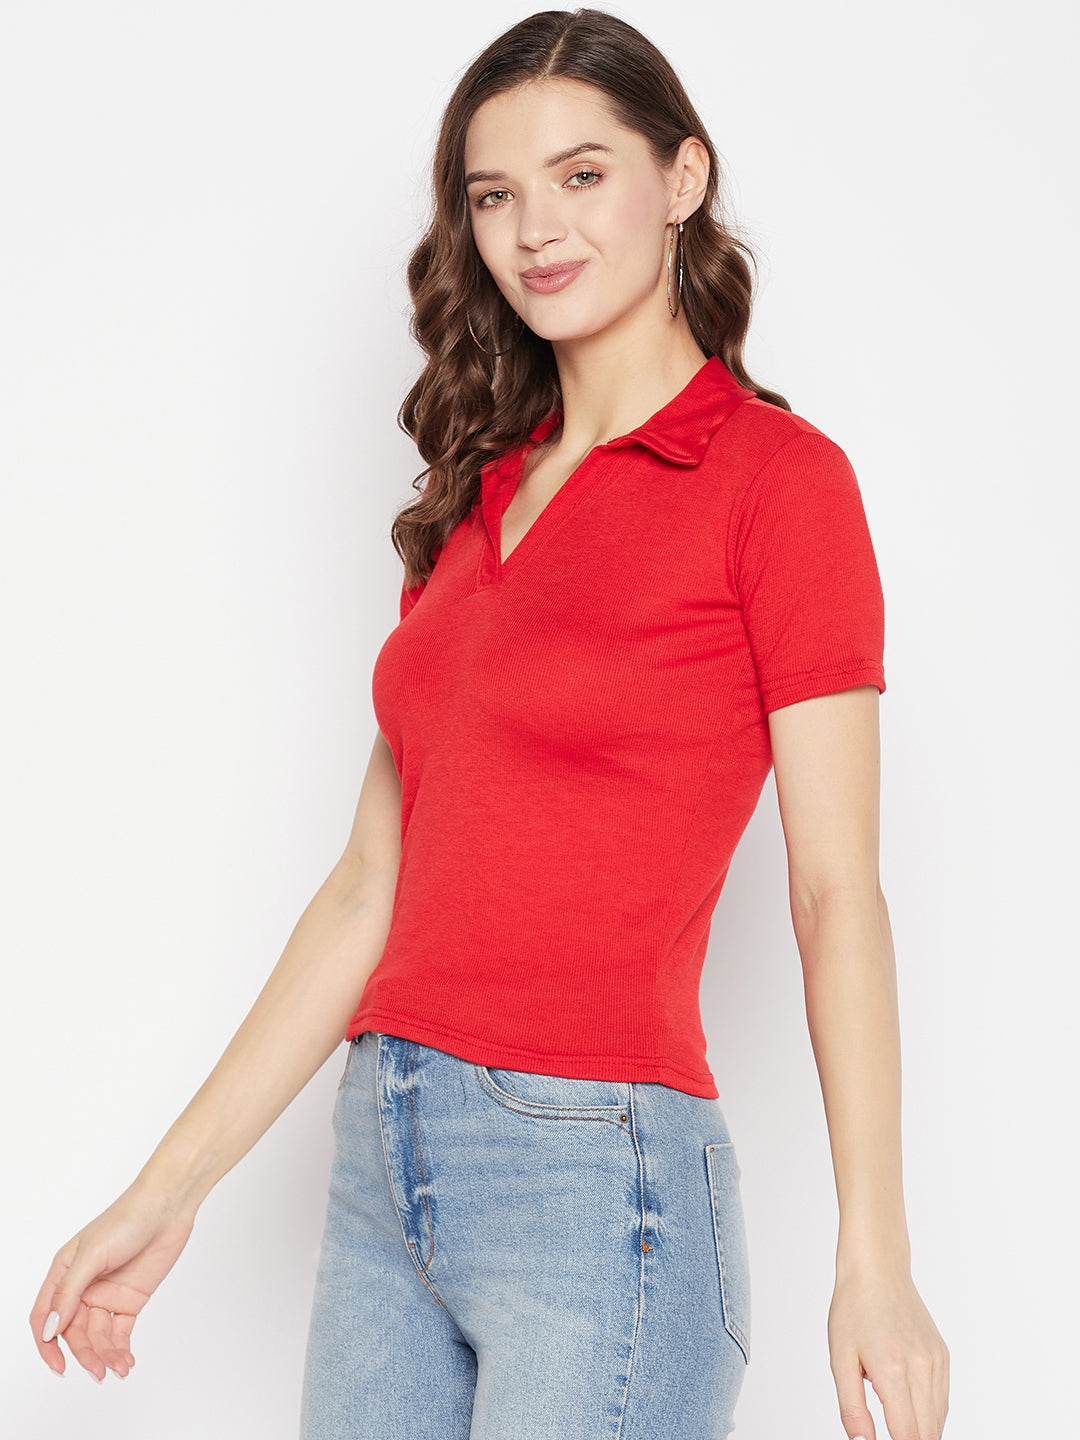 Clora Red Solid Shirt Collar Crop Top